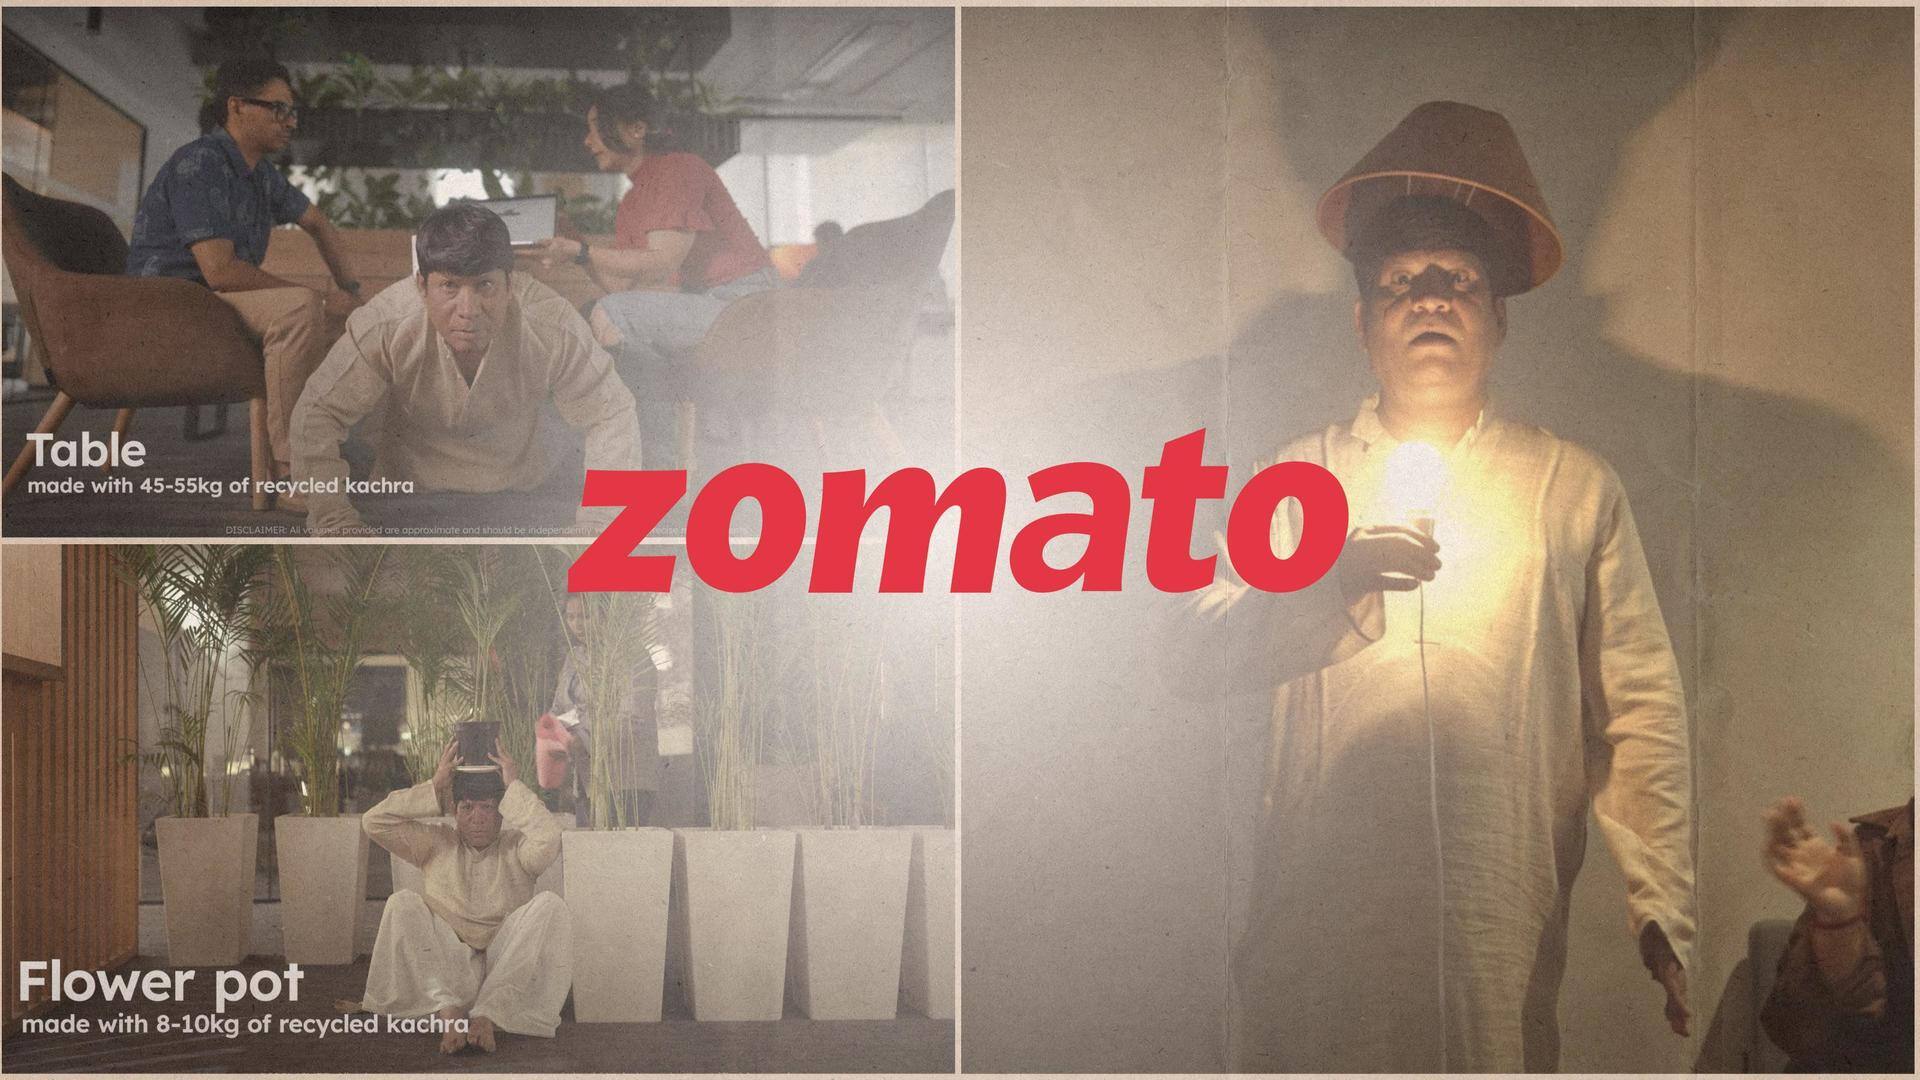 Following immense online uproar, Zomato deletes its controversial 'Kachra' advertisement